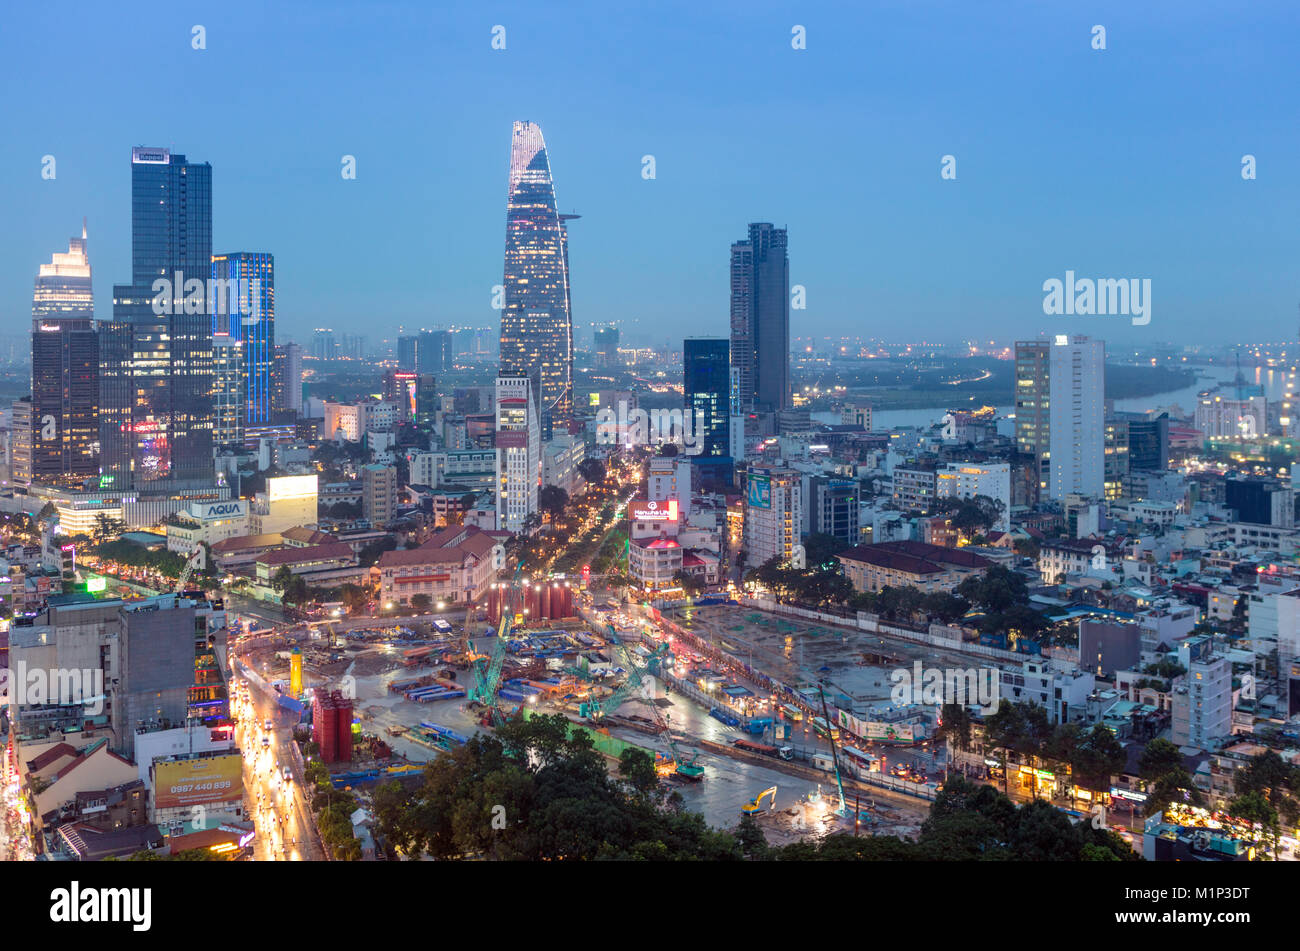 City skyline at night showing the Bitexco tower, Ho Chi Minh City (Saigon), Vietnam, Indochina, Southeast Asia, Asia Stock Photo